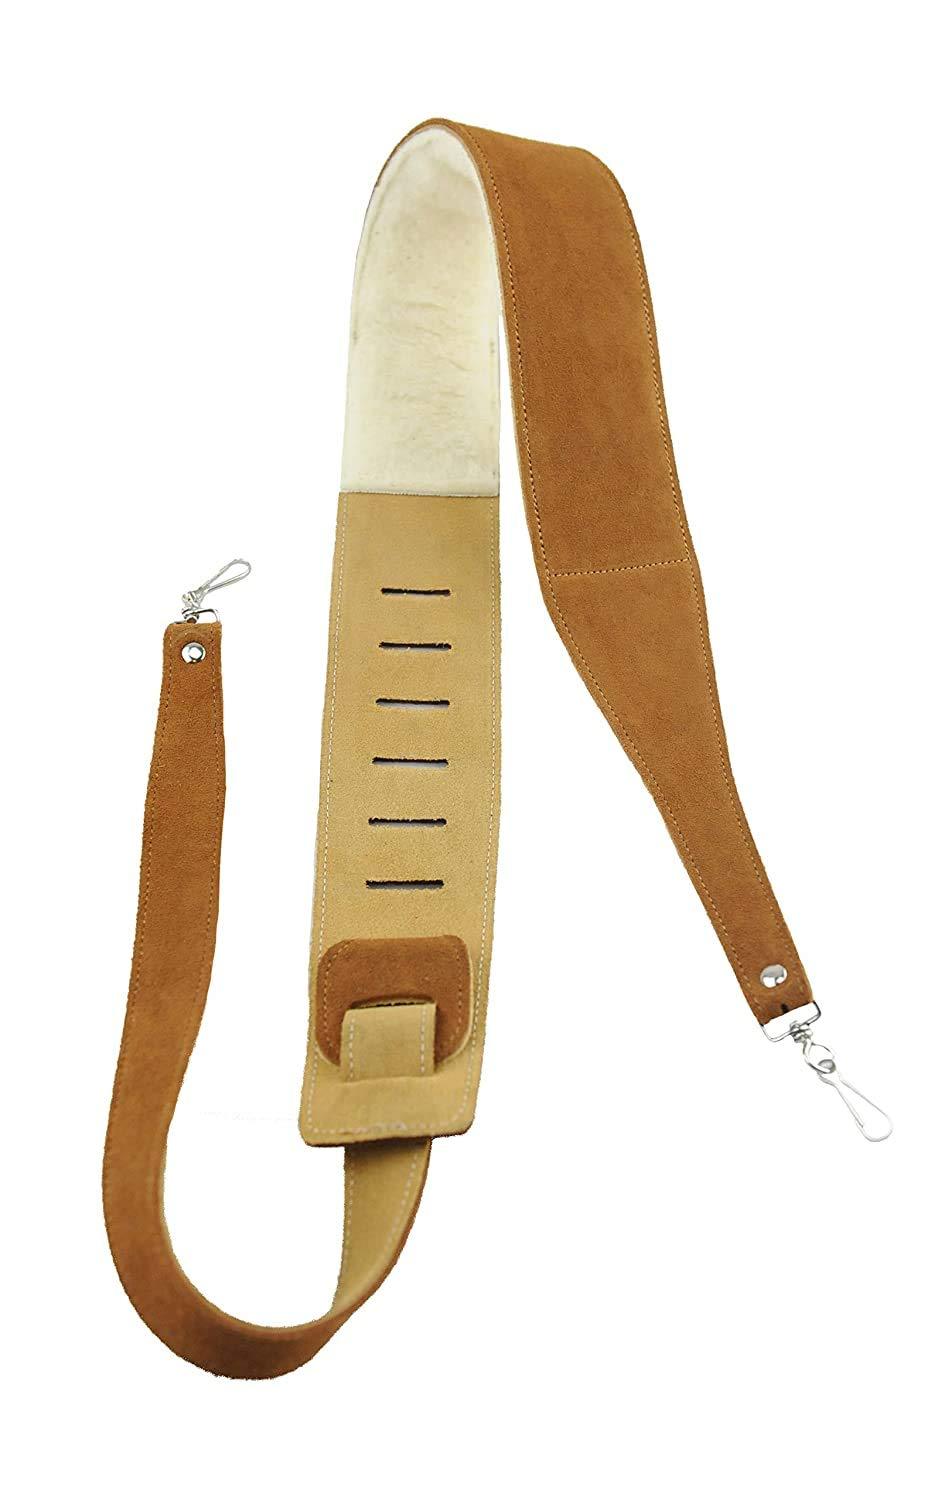 [AUSTRALIA] - Perri's Leathers Suede Leather Banjo Strap, Natural, Soft Sheepskin Fur Pad, Snap Metal Hook, Adjustable Length 44.5" to 53", 2.5" Wide 